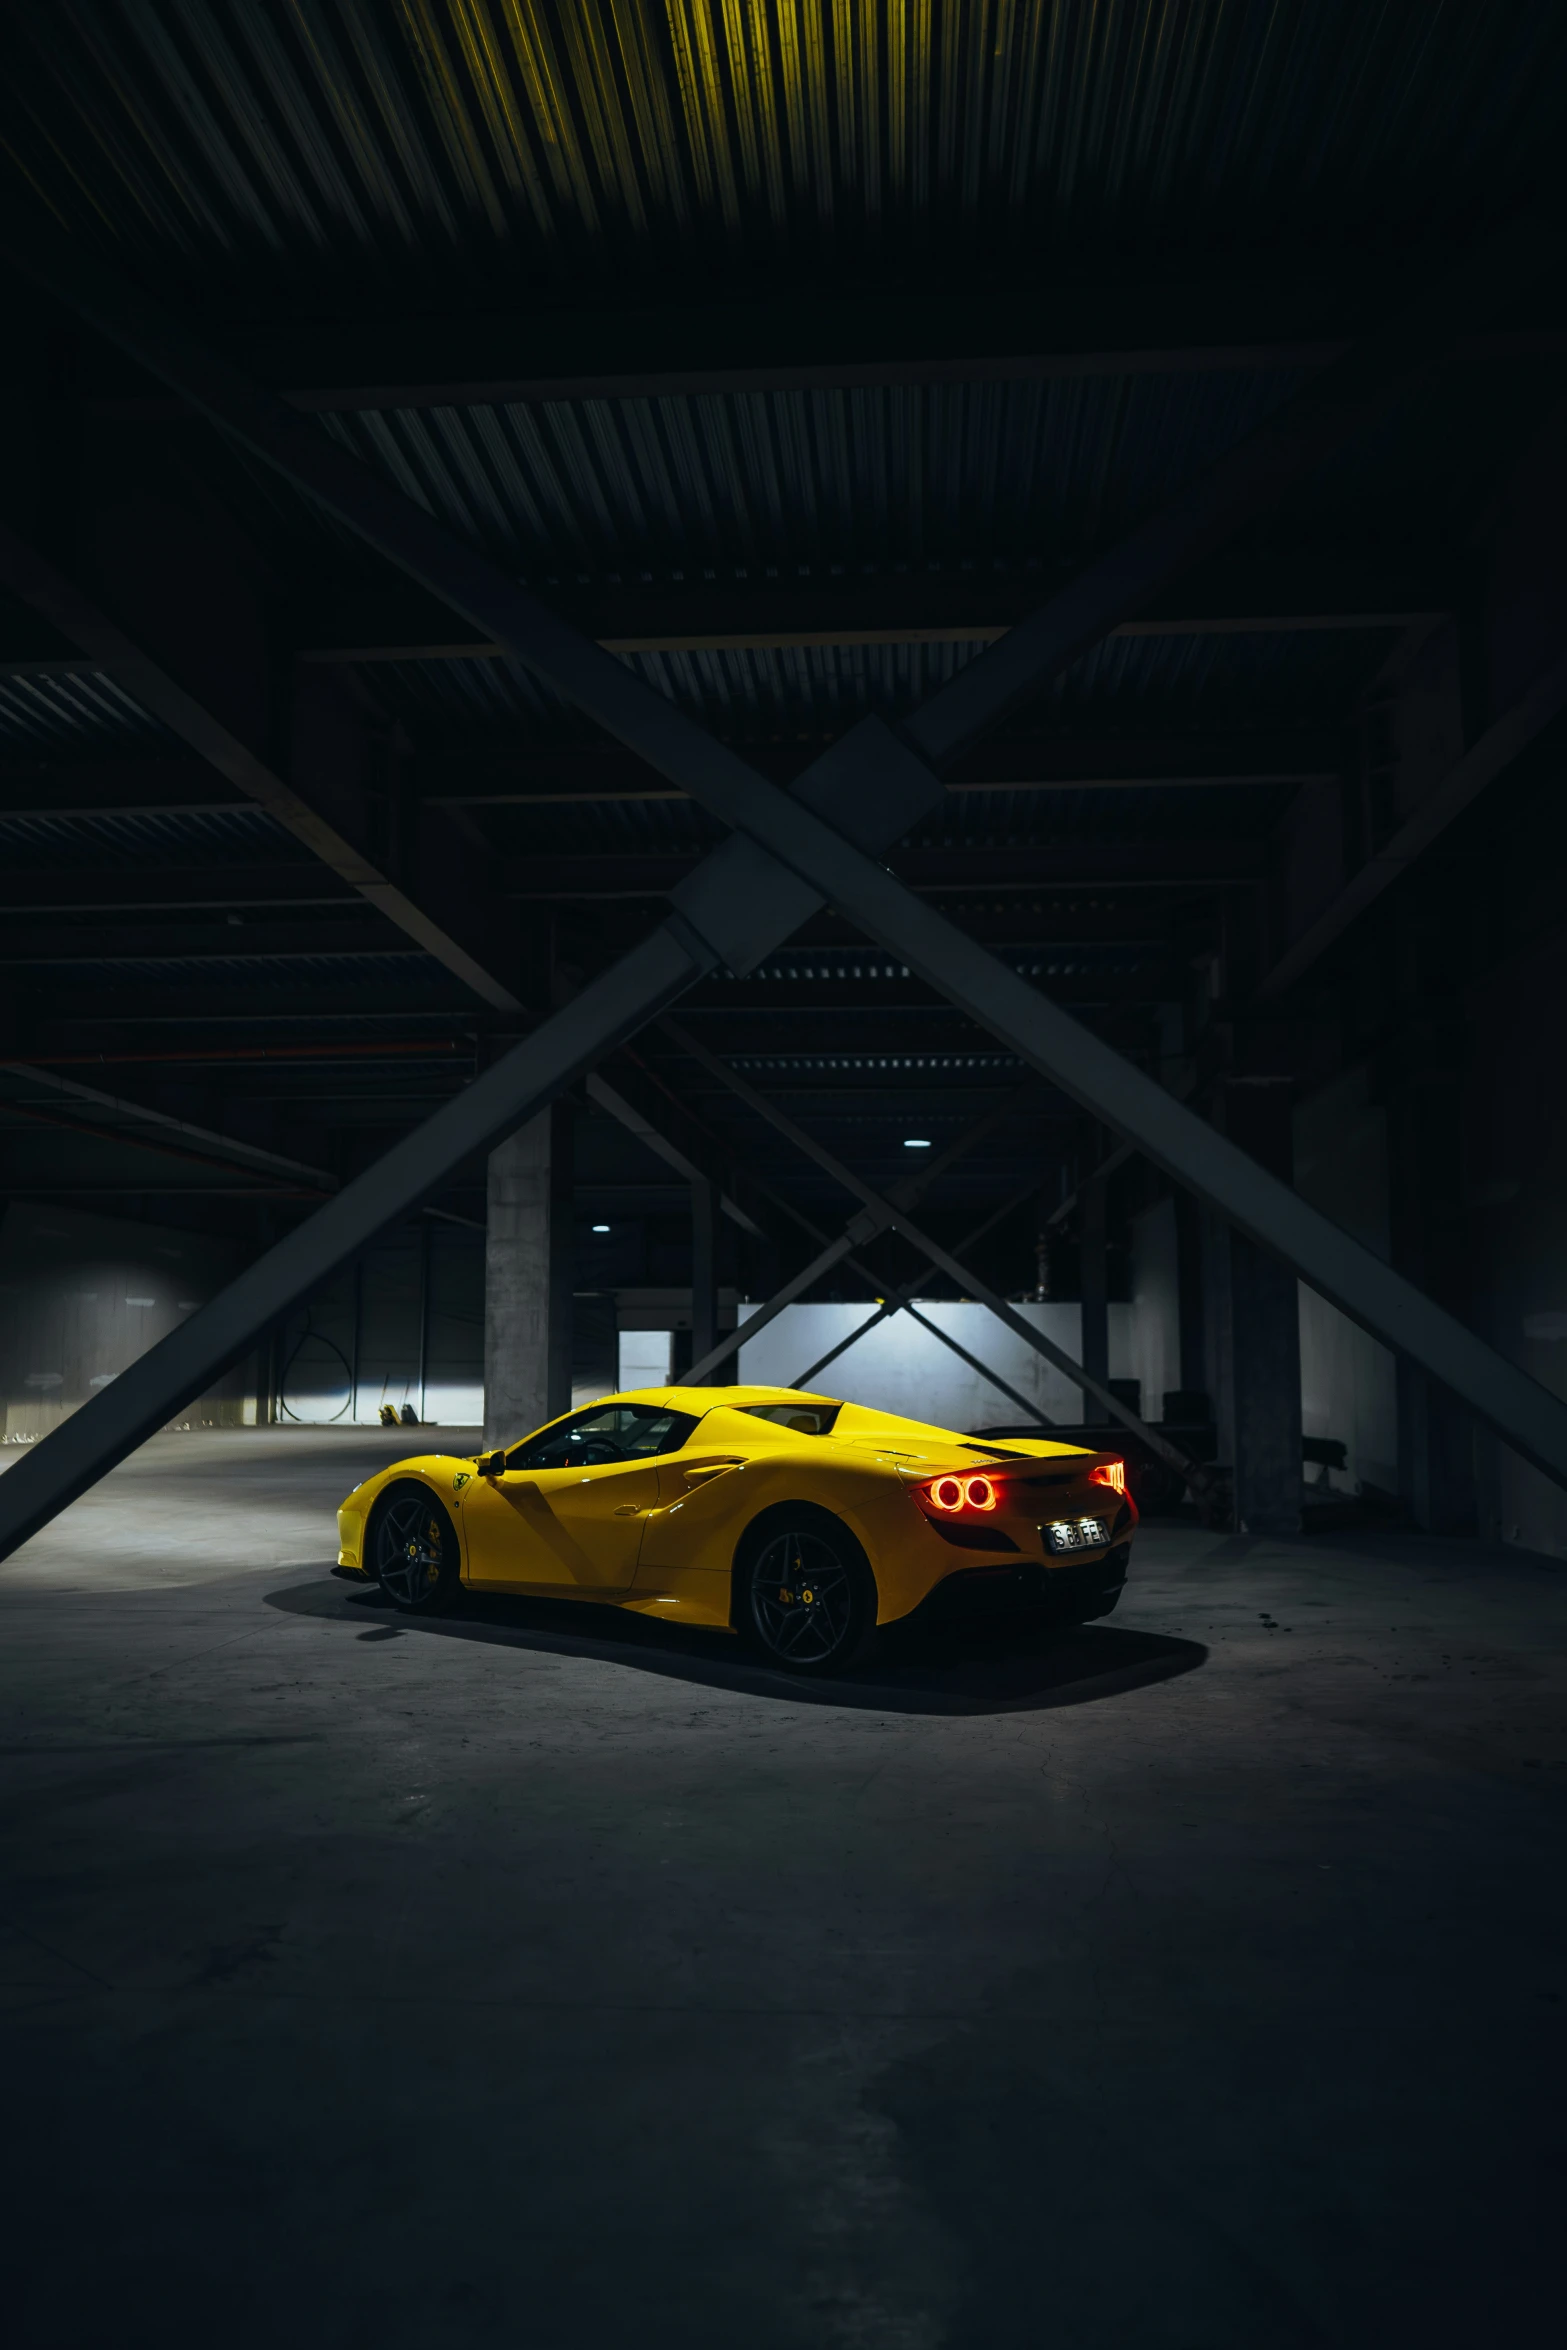 a yellow sports car sitting in the dark